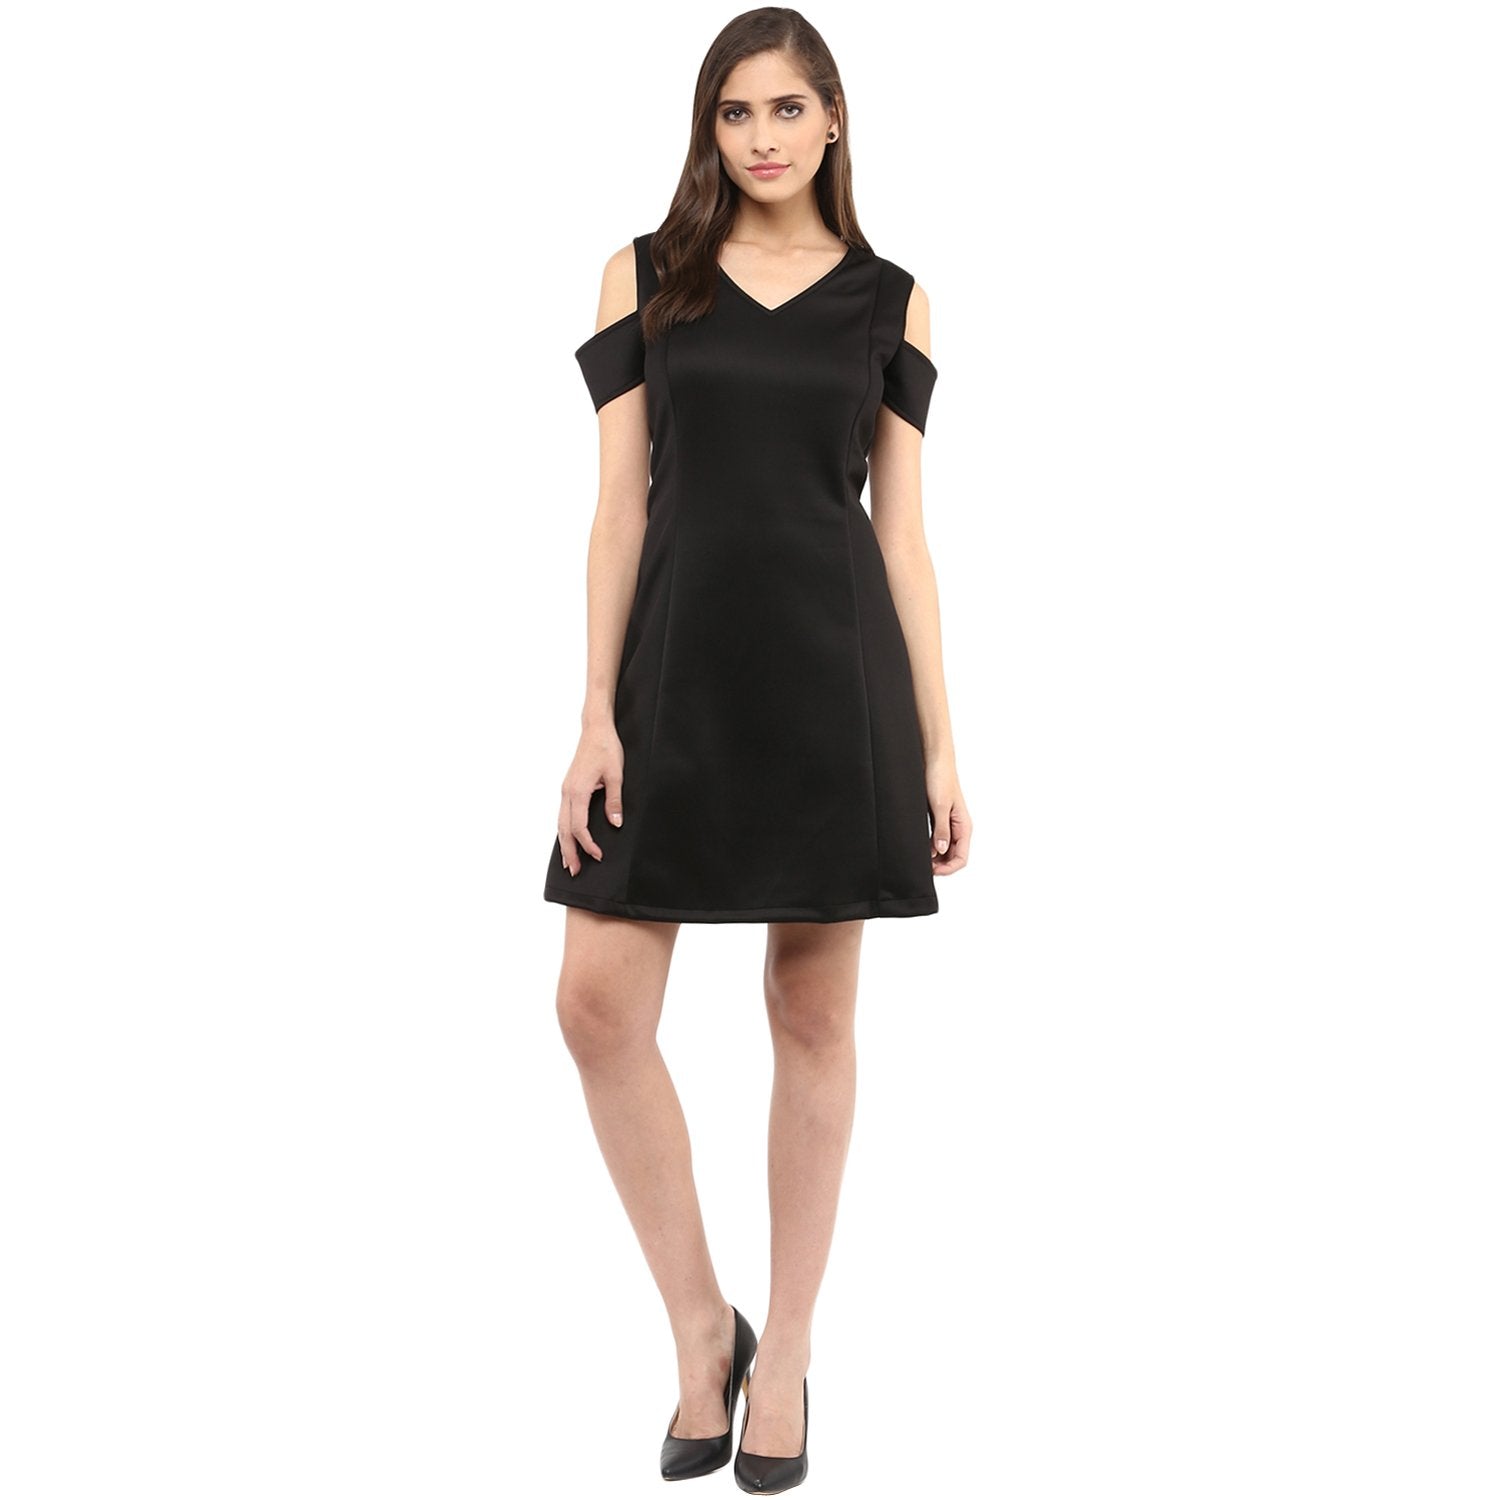 Women's Black Cold Shoulder Dress - Pannkh